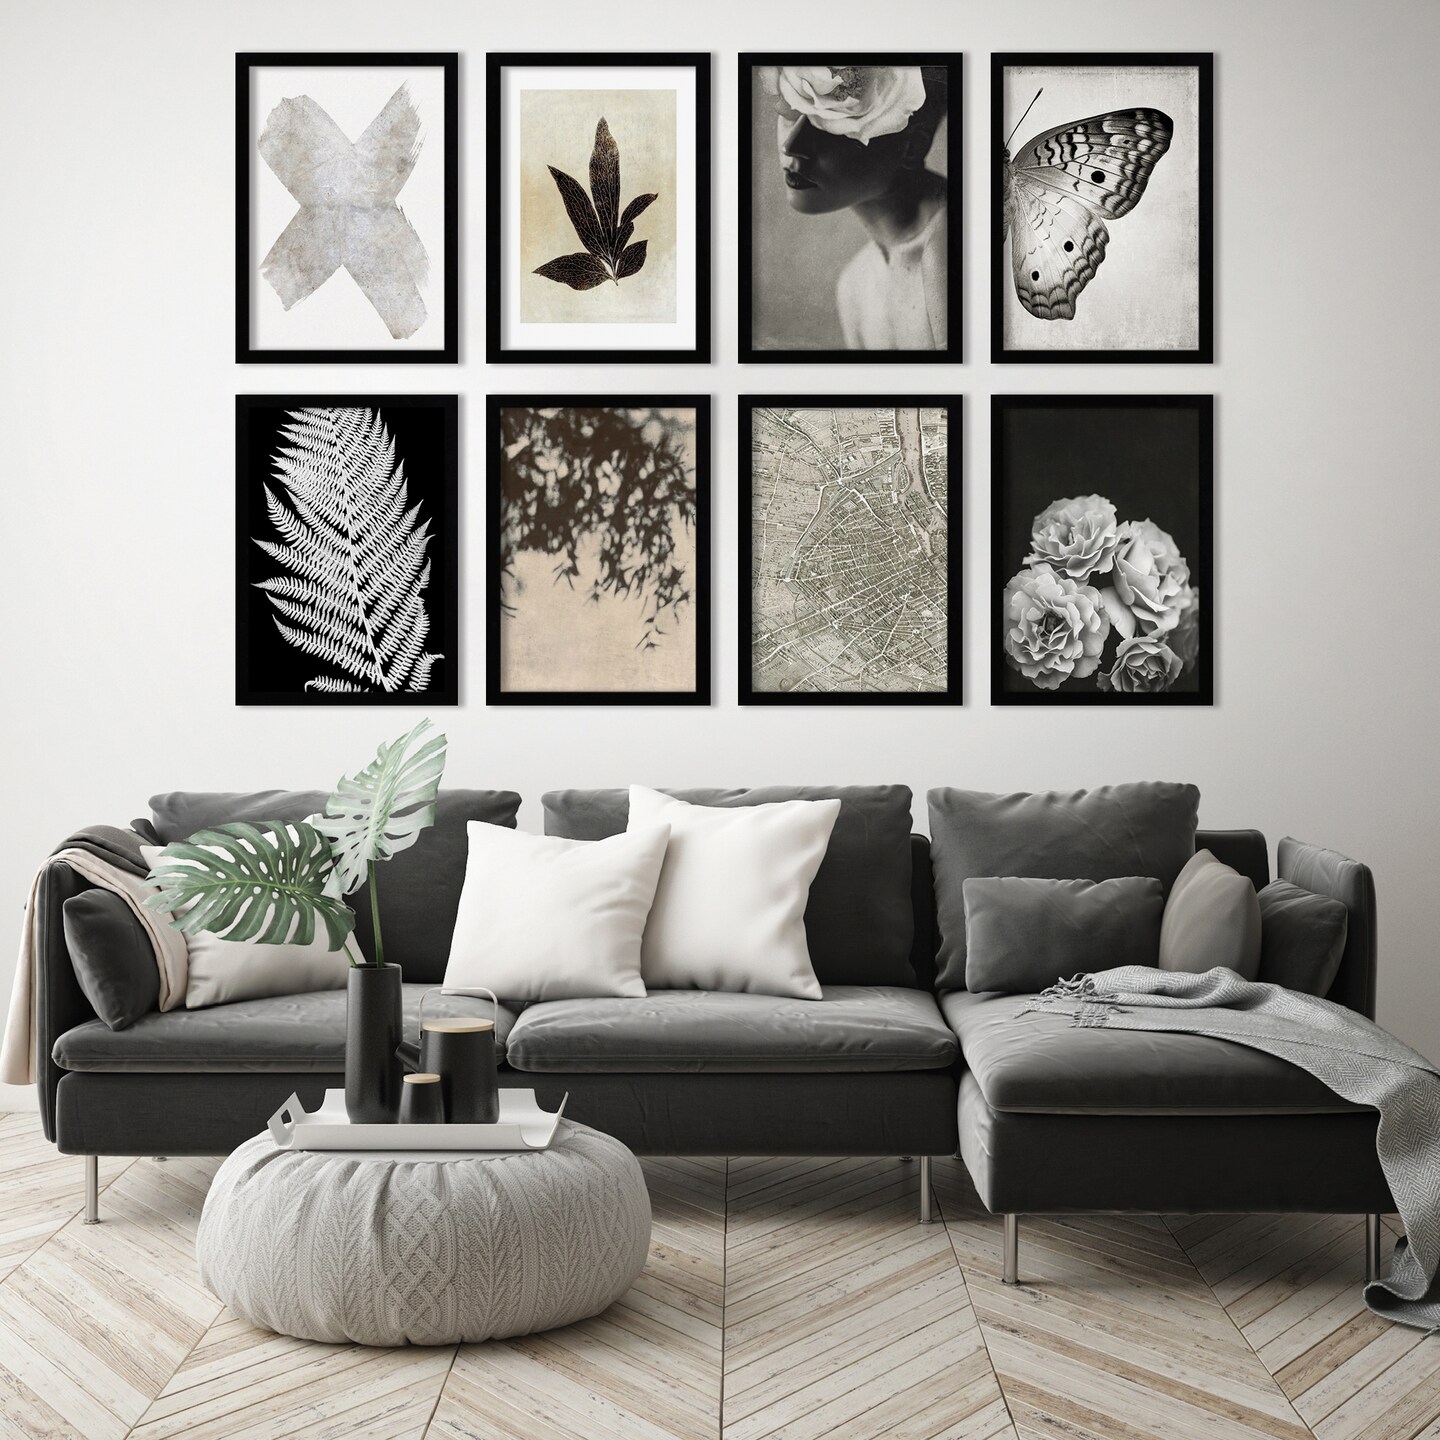 Black and White Botanicals by Chaos &#x26; Wonder Design - 8 Piece Framed Art Set